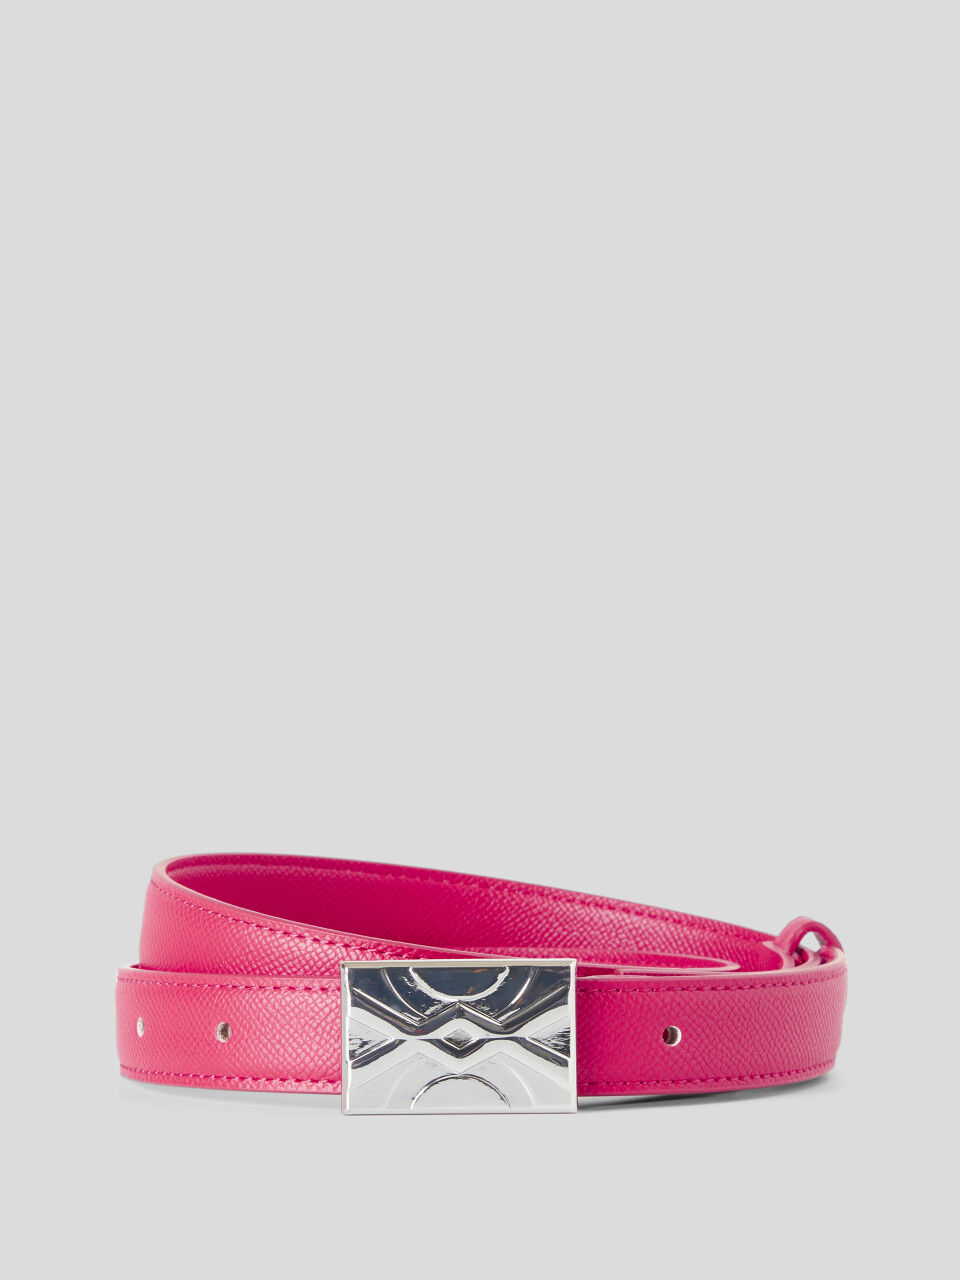 WOMEN FASHION Accessories Belt Pink Benetton belt discount 57% Pink S 